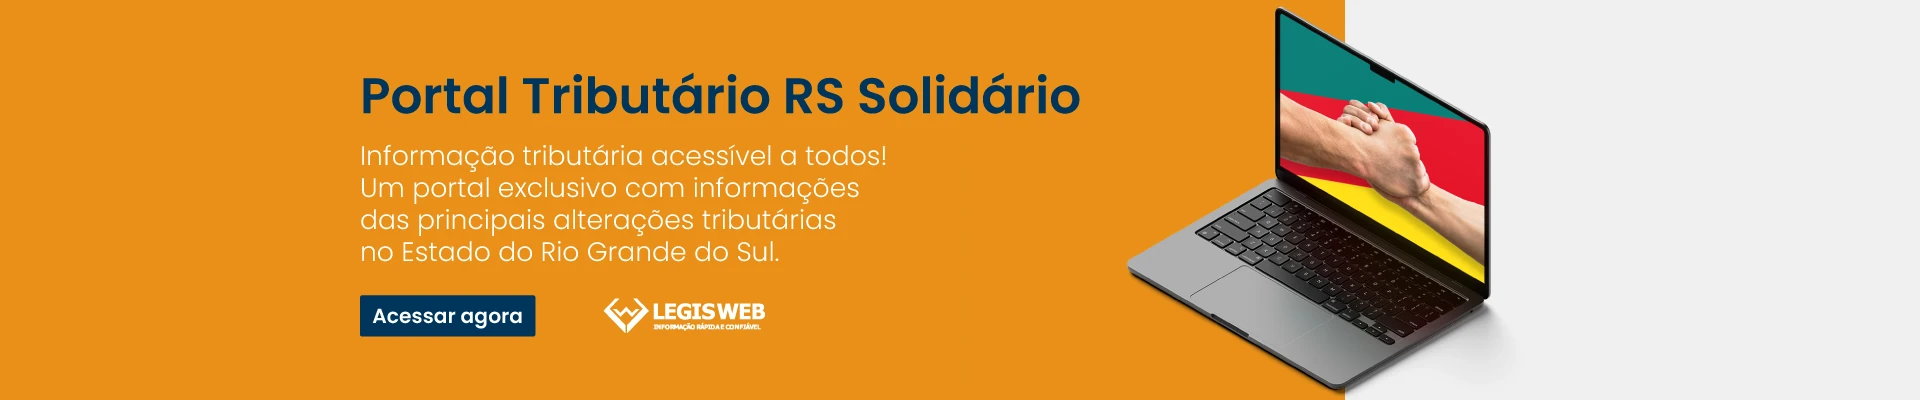 Portal RS Solidrio